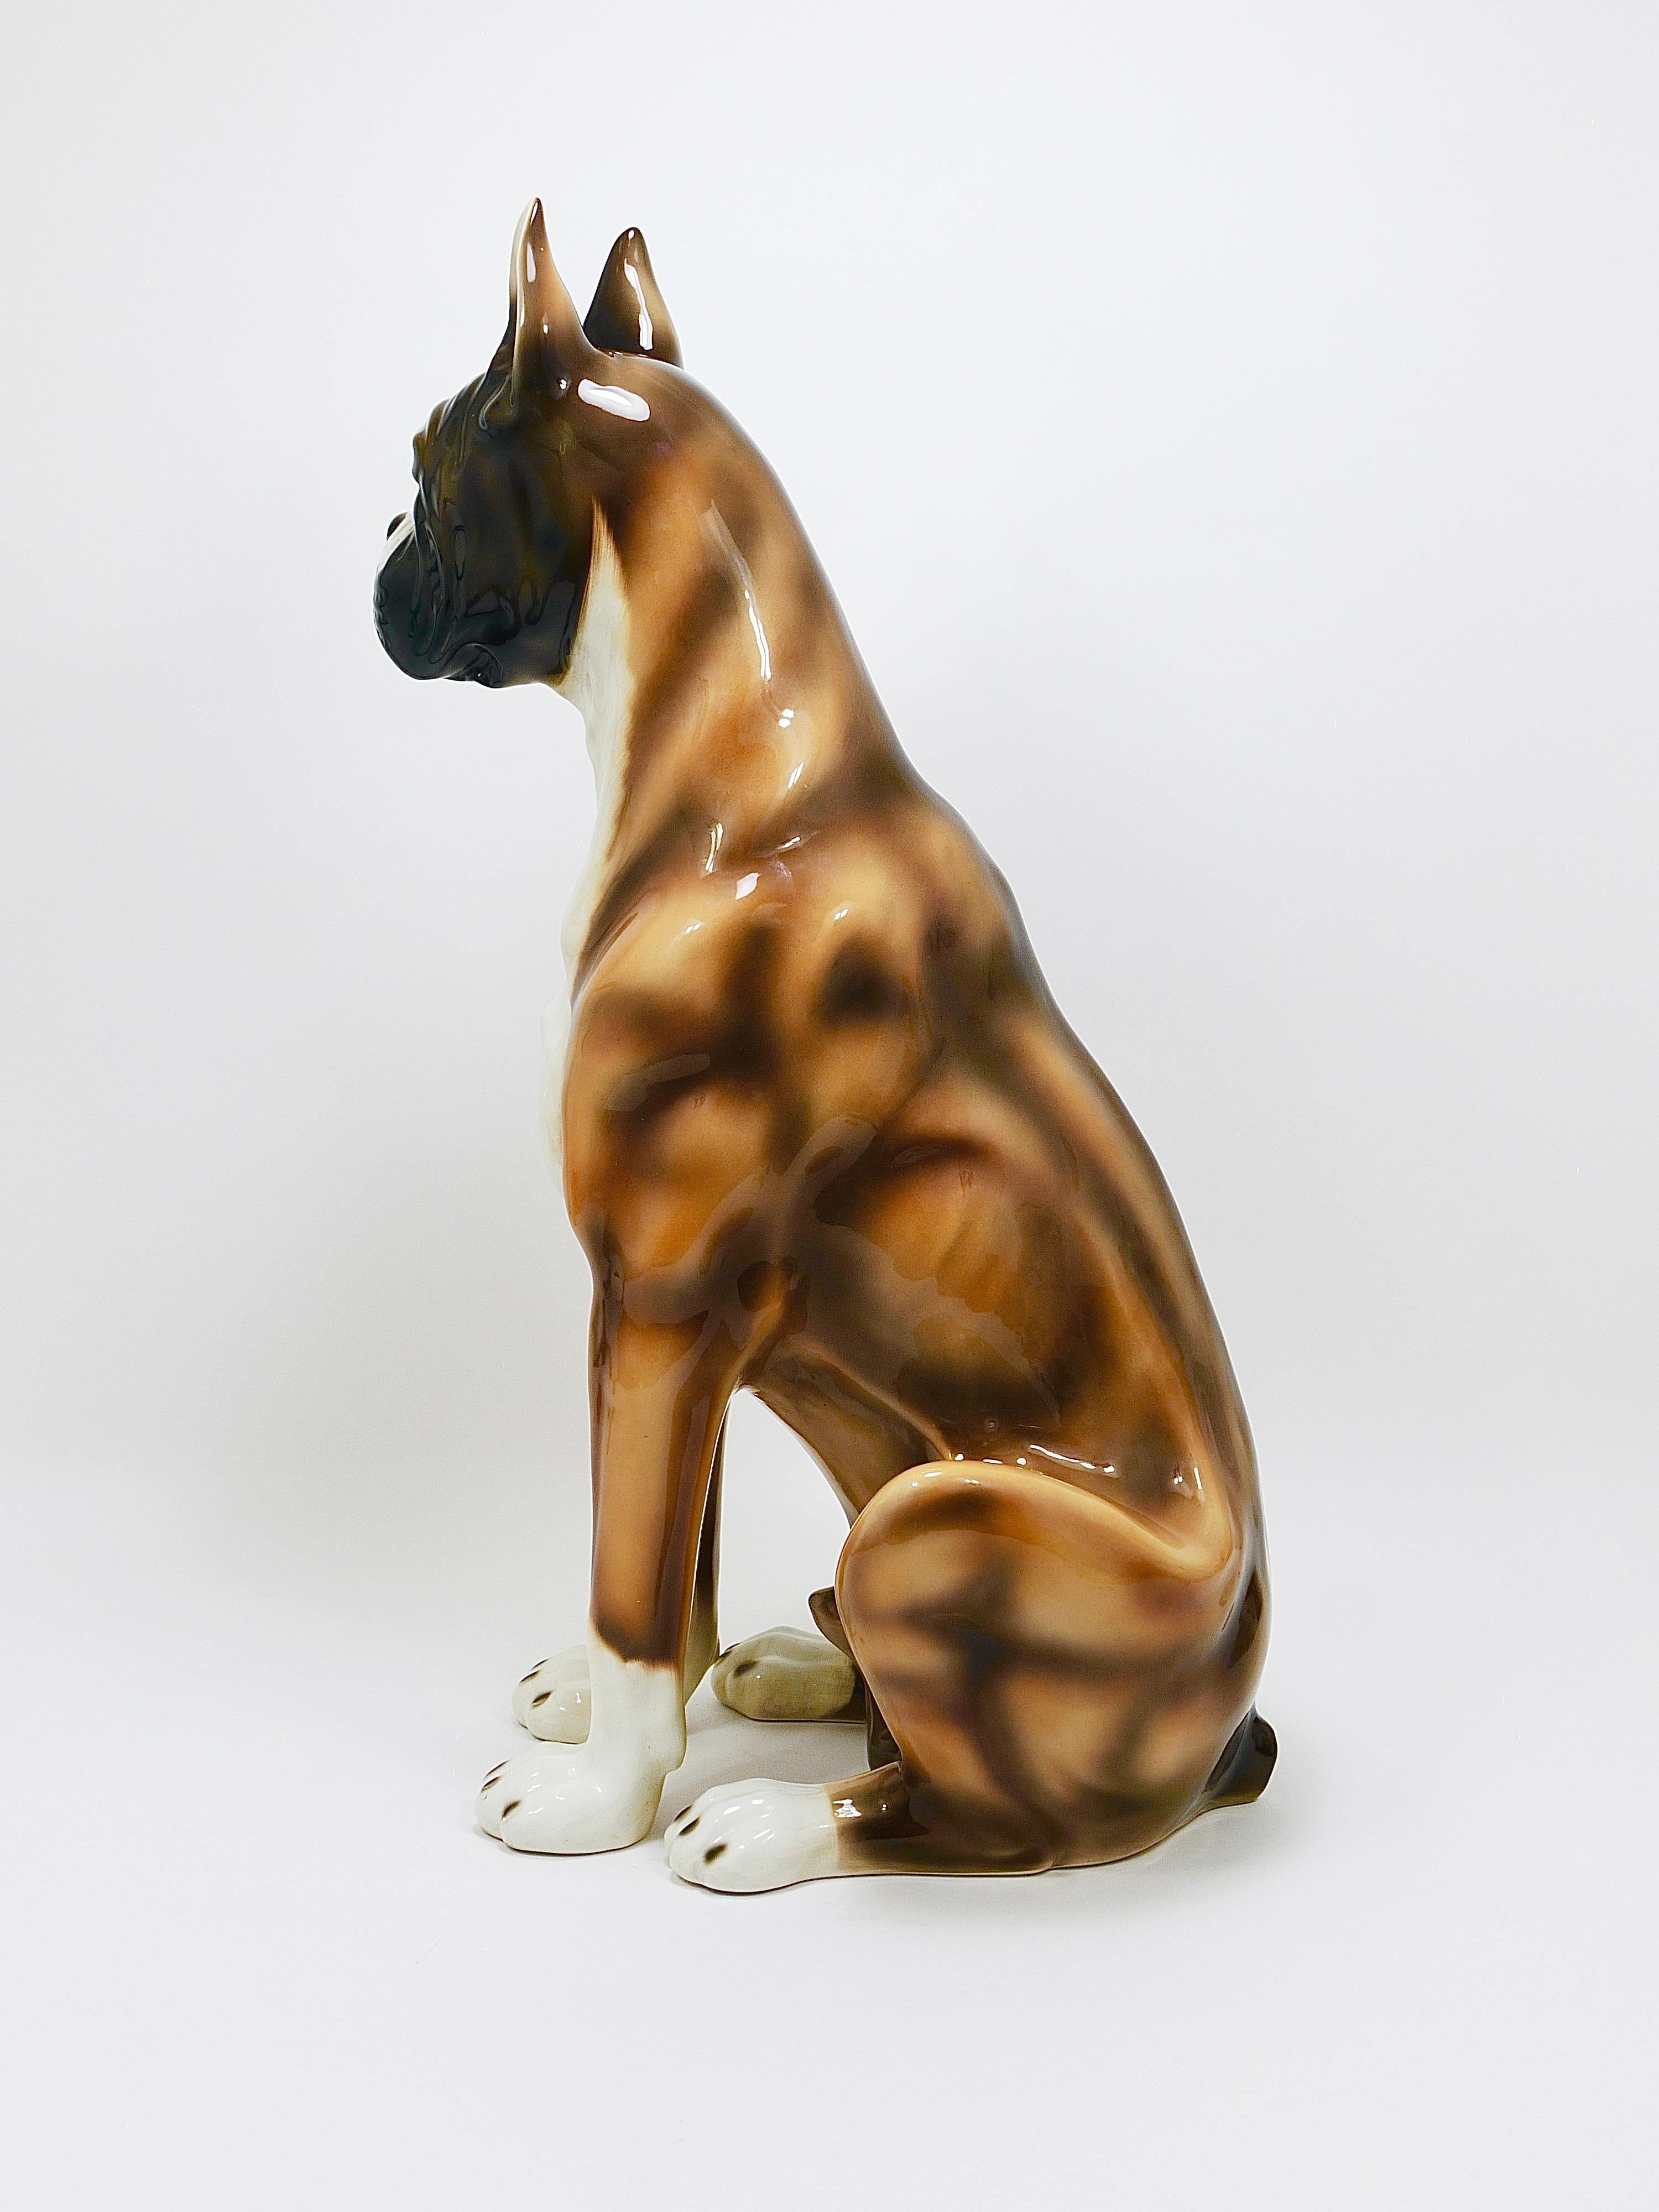 Boxer Dog Life-Size Majolica Statue Sculpture, Glazed Ceramic, Italy, 1970s For Sale 7